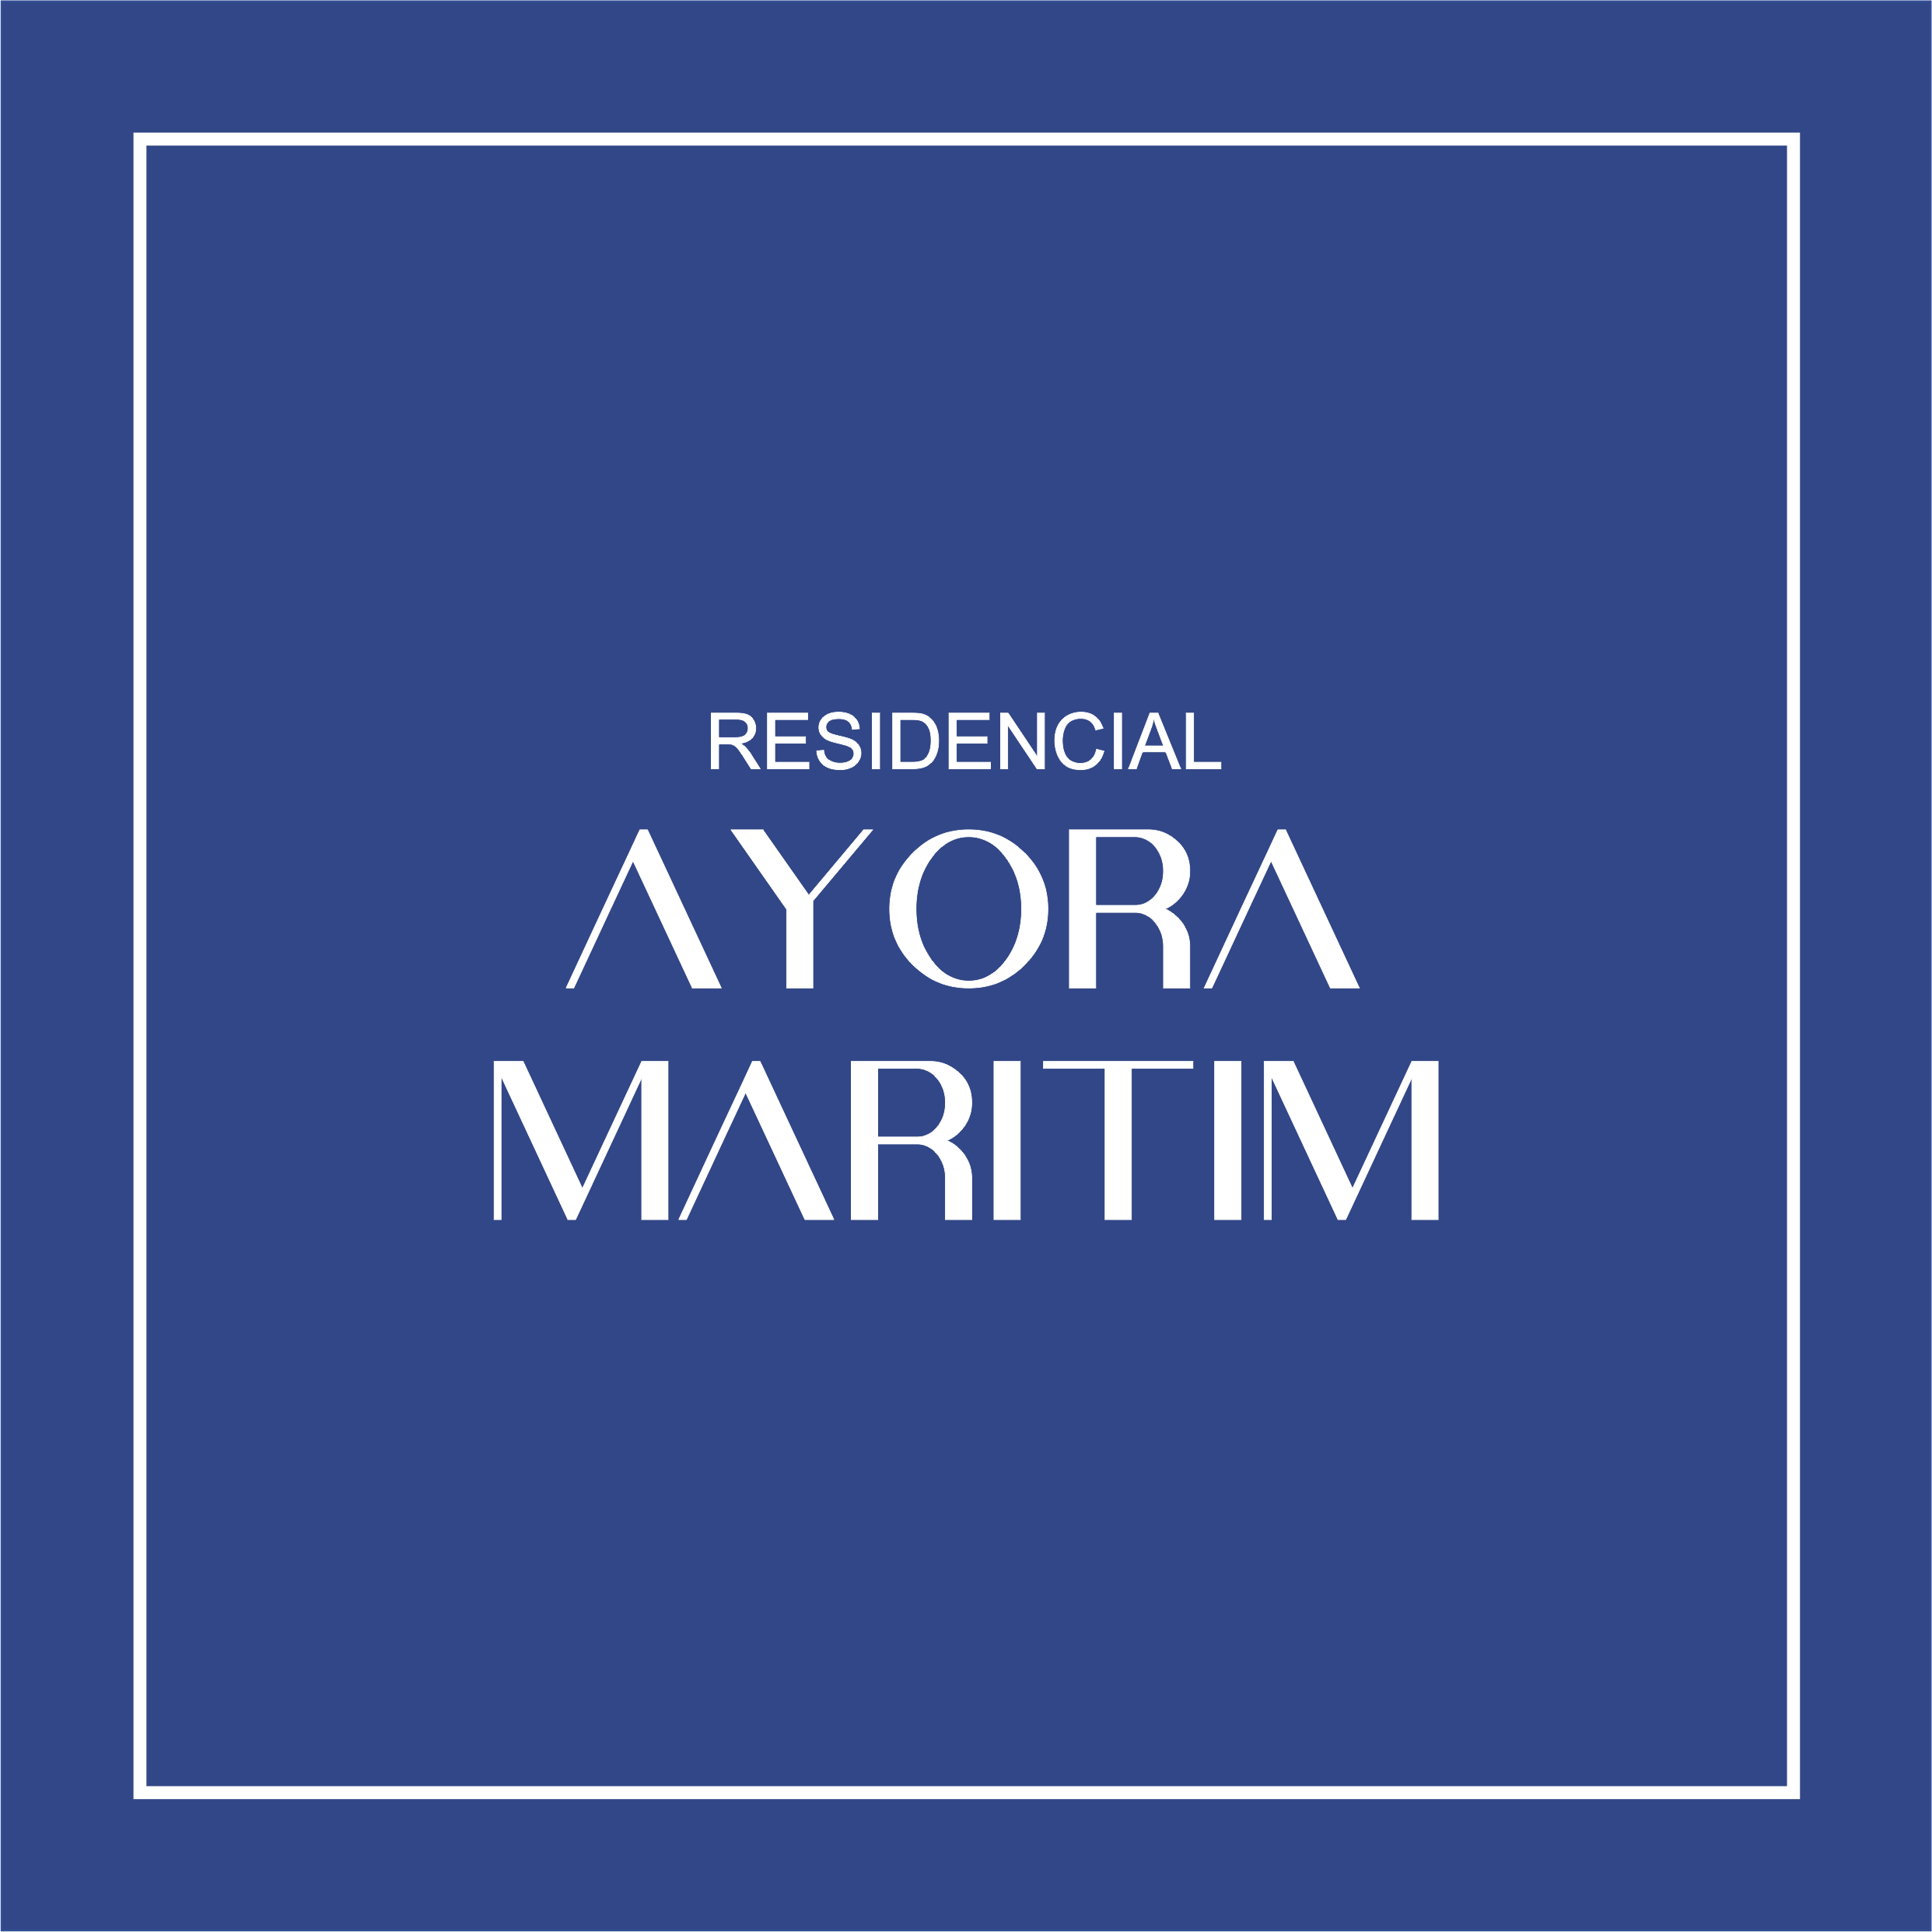 Residencial Ayora Maritim - Valencia